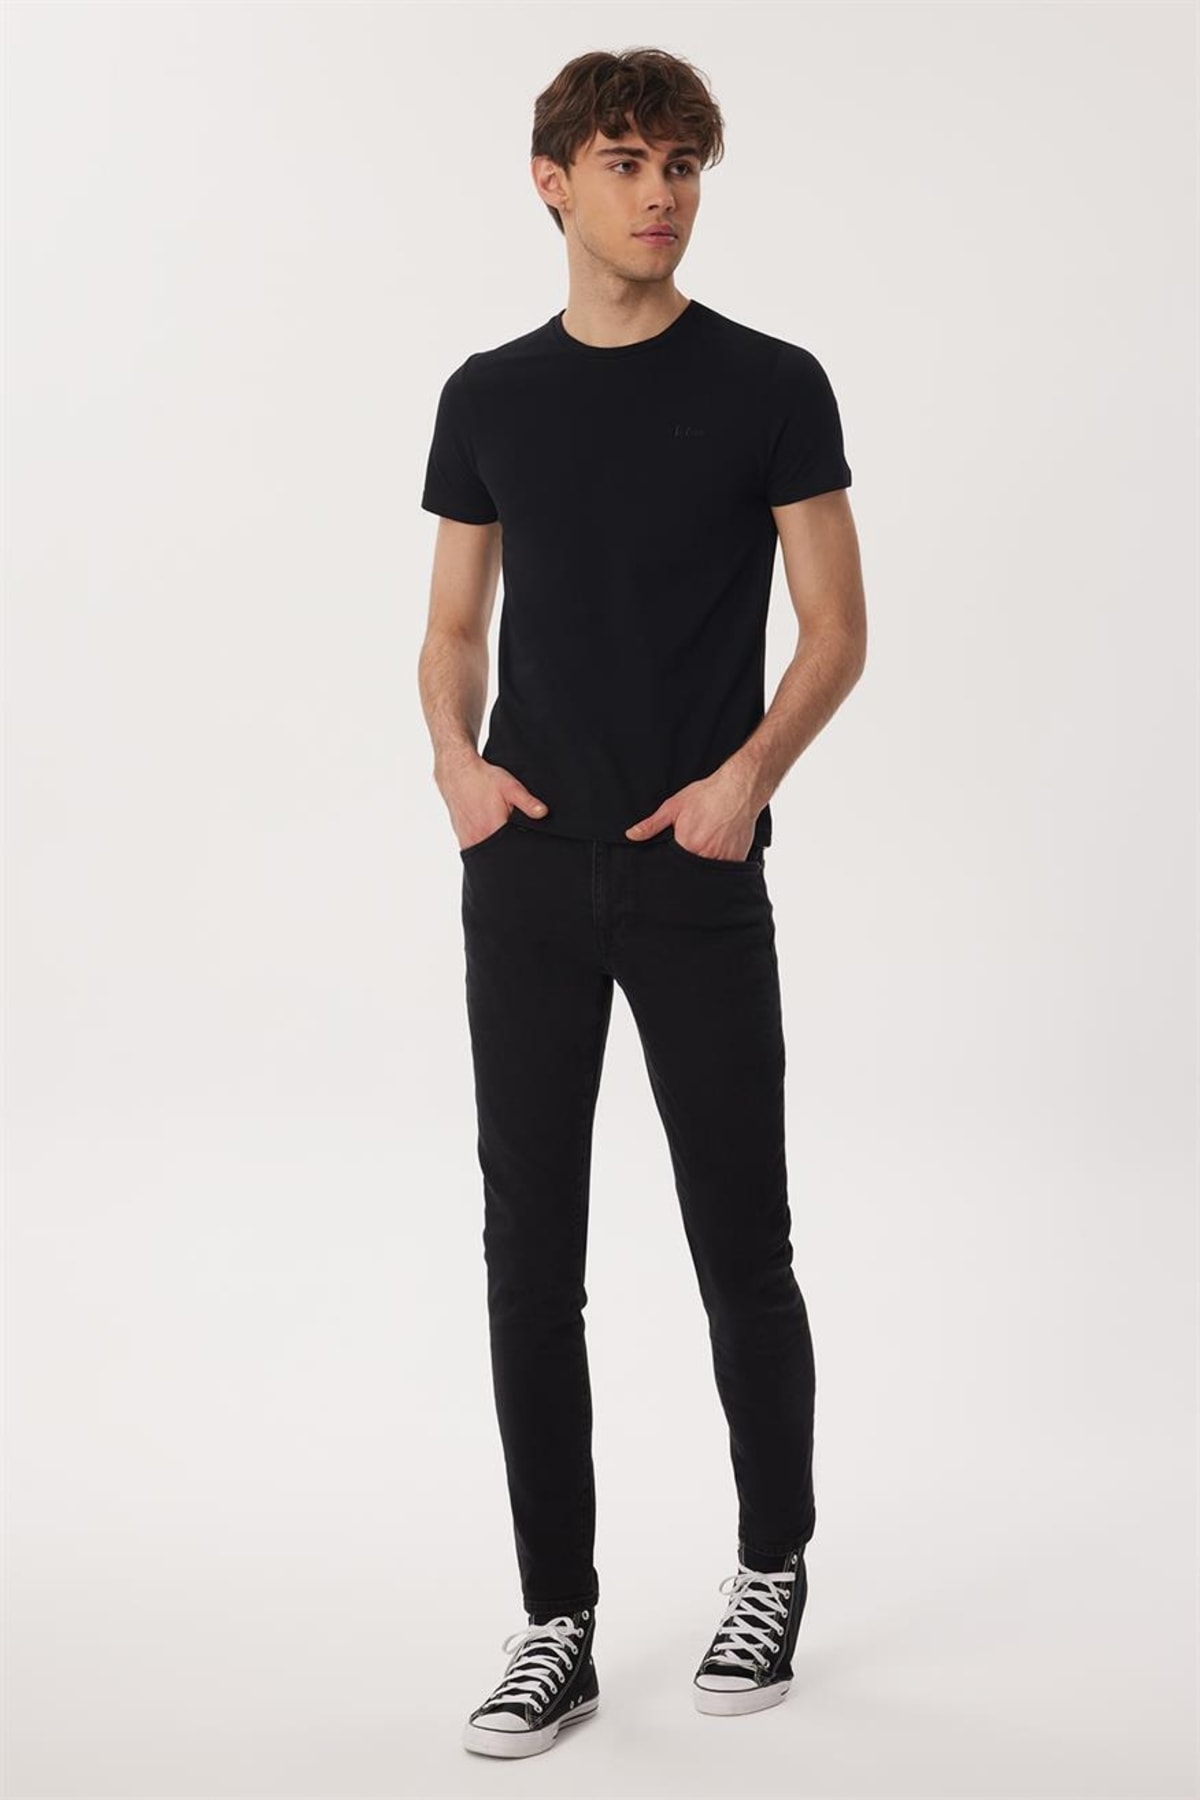 Lee Cooper Men's Twingo 1 O Neck Pique T-shirt Black